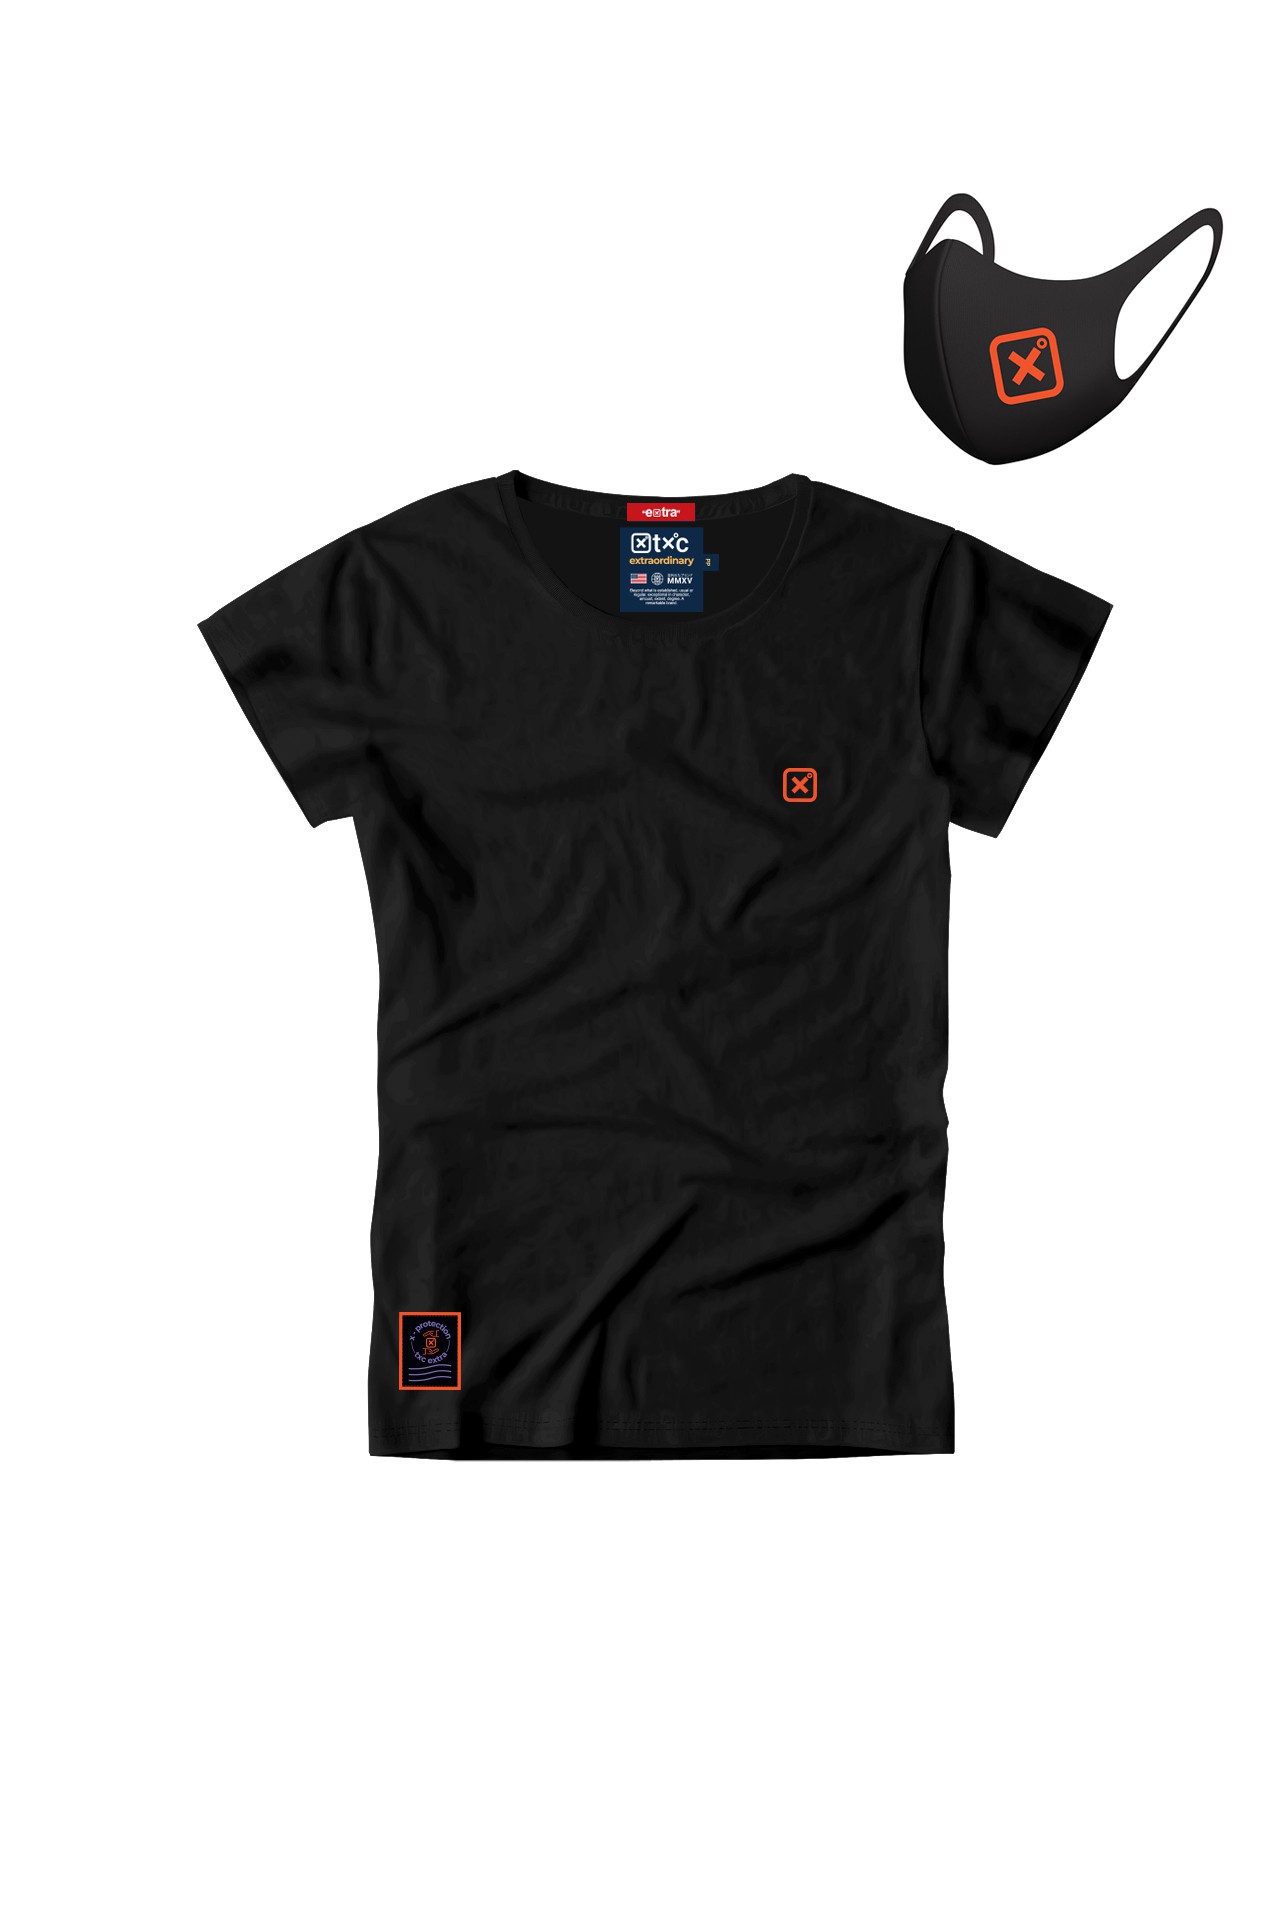 Kit camiseta + máscara feminina x-protection TXC 4773